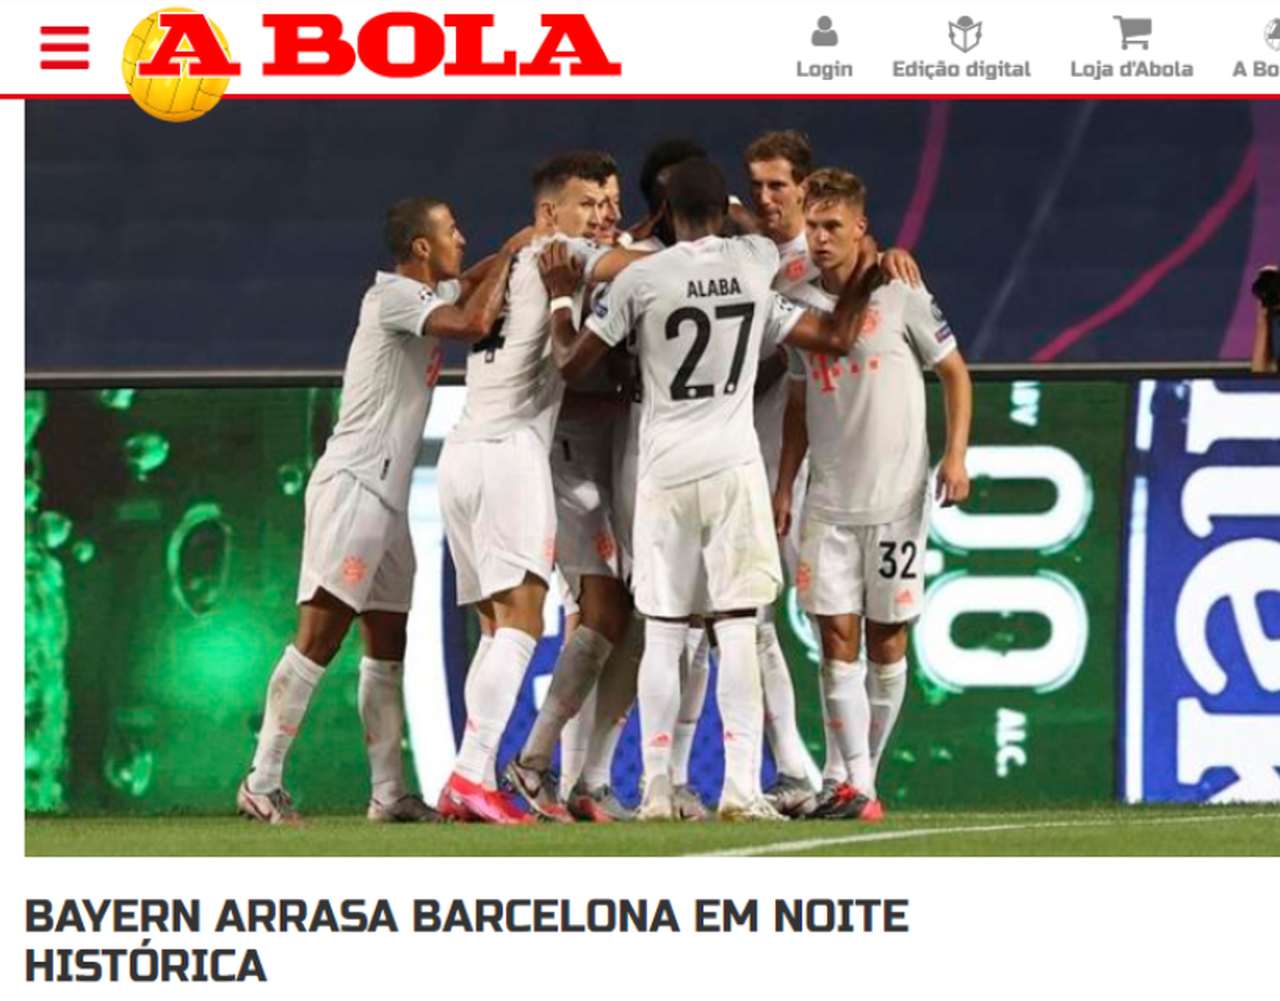 Jornal português 'A Bola': "Bayern arrasa Barcelona em noite histórica"